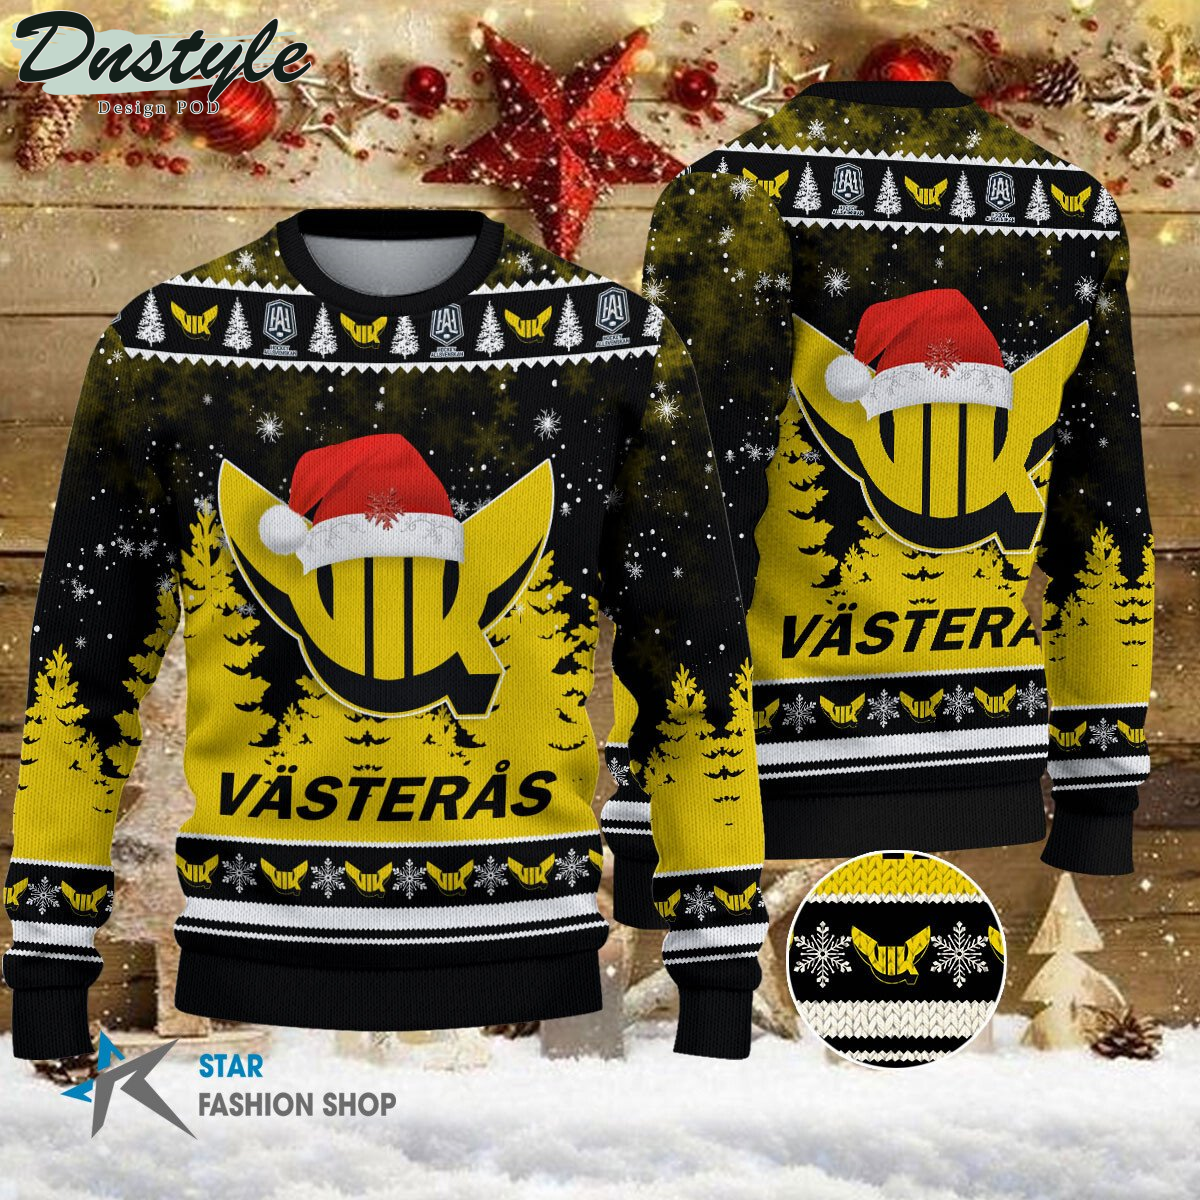 VIK Västerås HK ugly christmas sweater